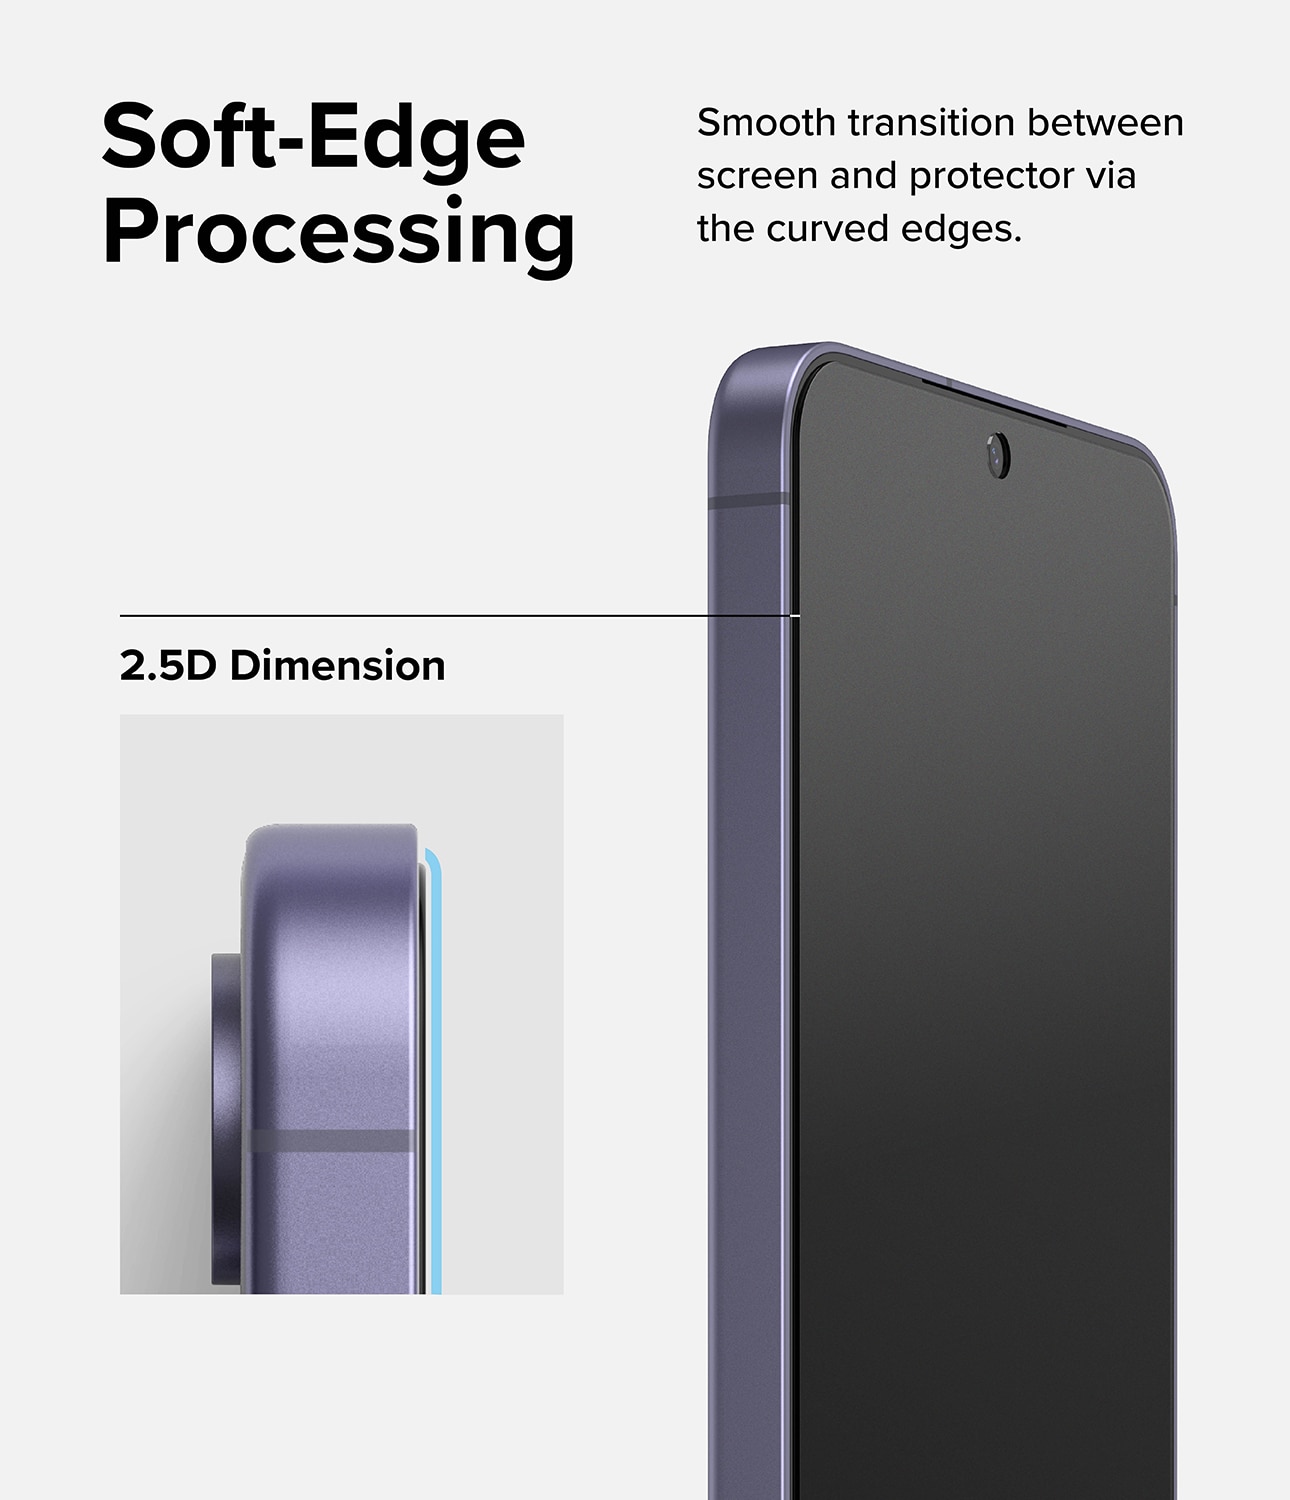 Easy Slide Glass (2 pezzi) Samsung Galaxy S24 Plus